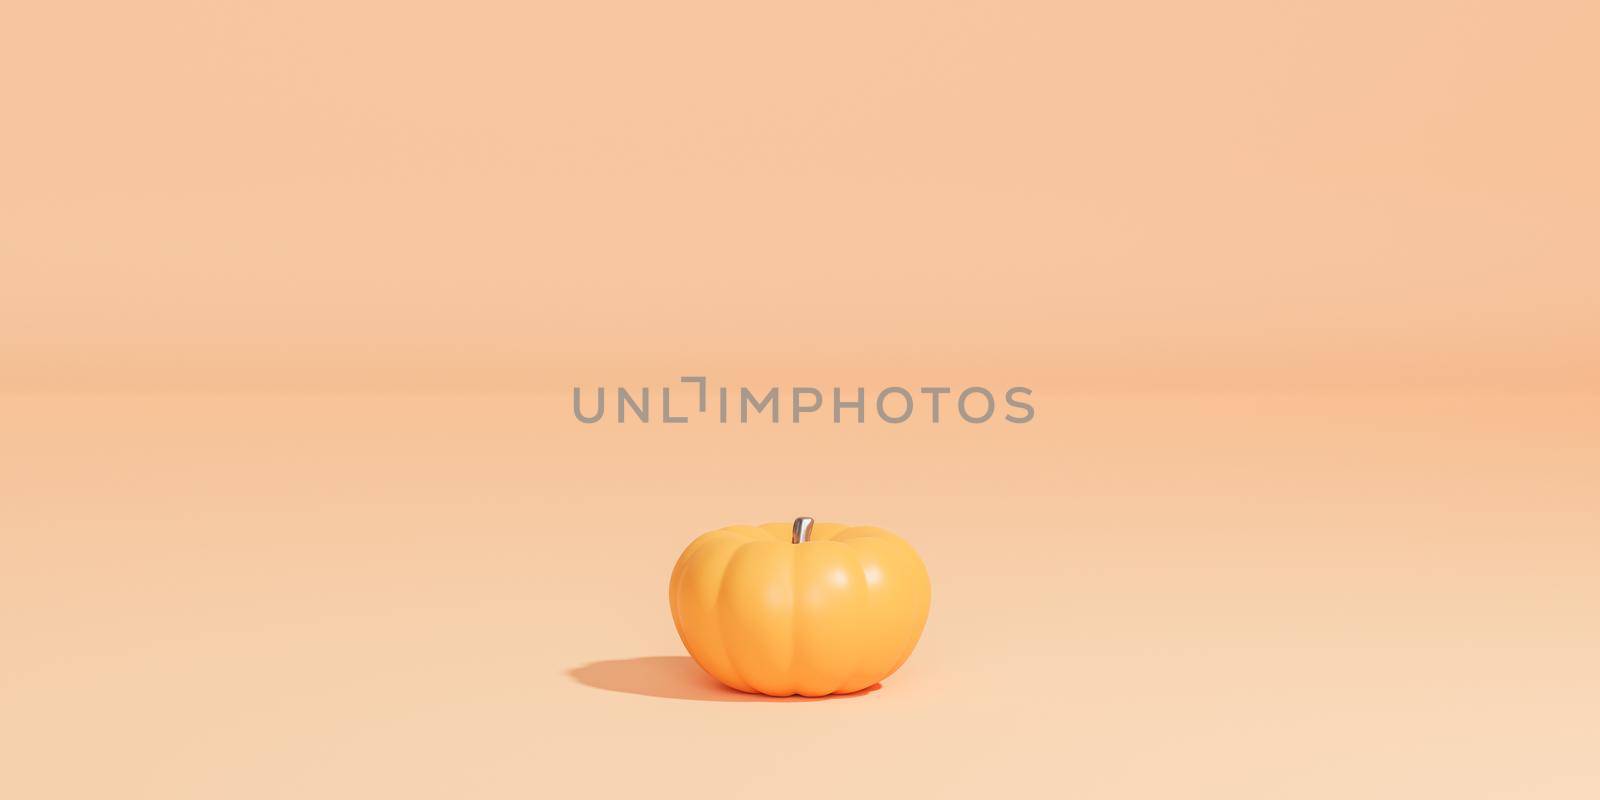 Pumpkin on beige background for advertising on autumn holidays or sales, 3d banner render